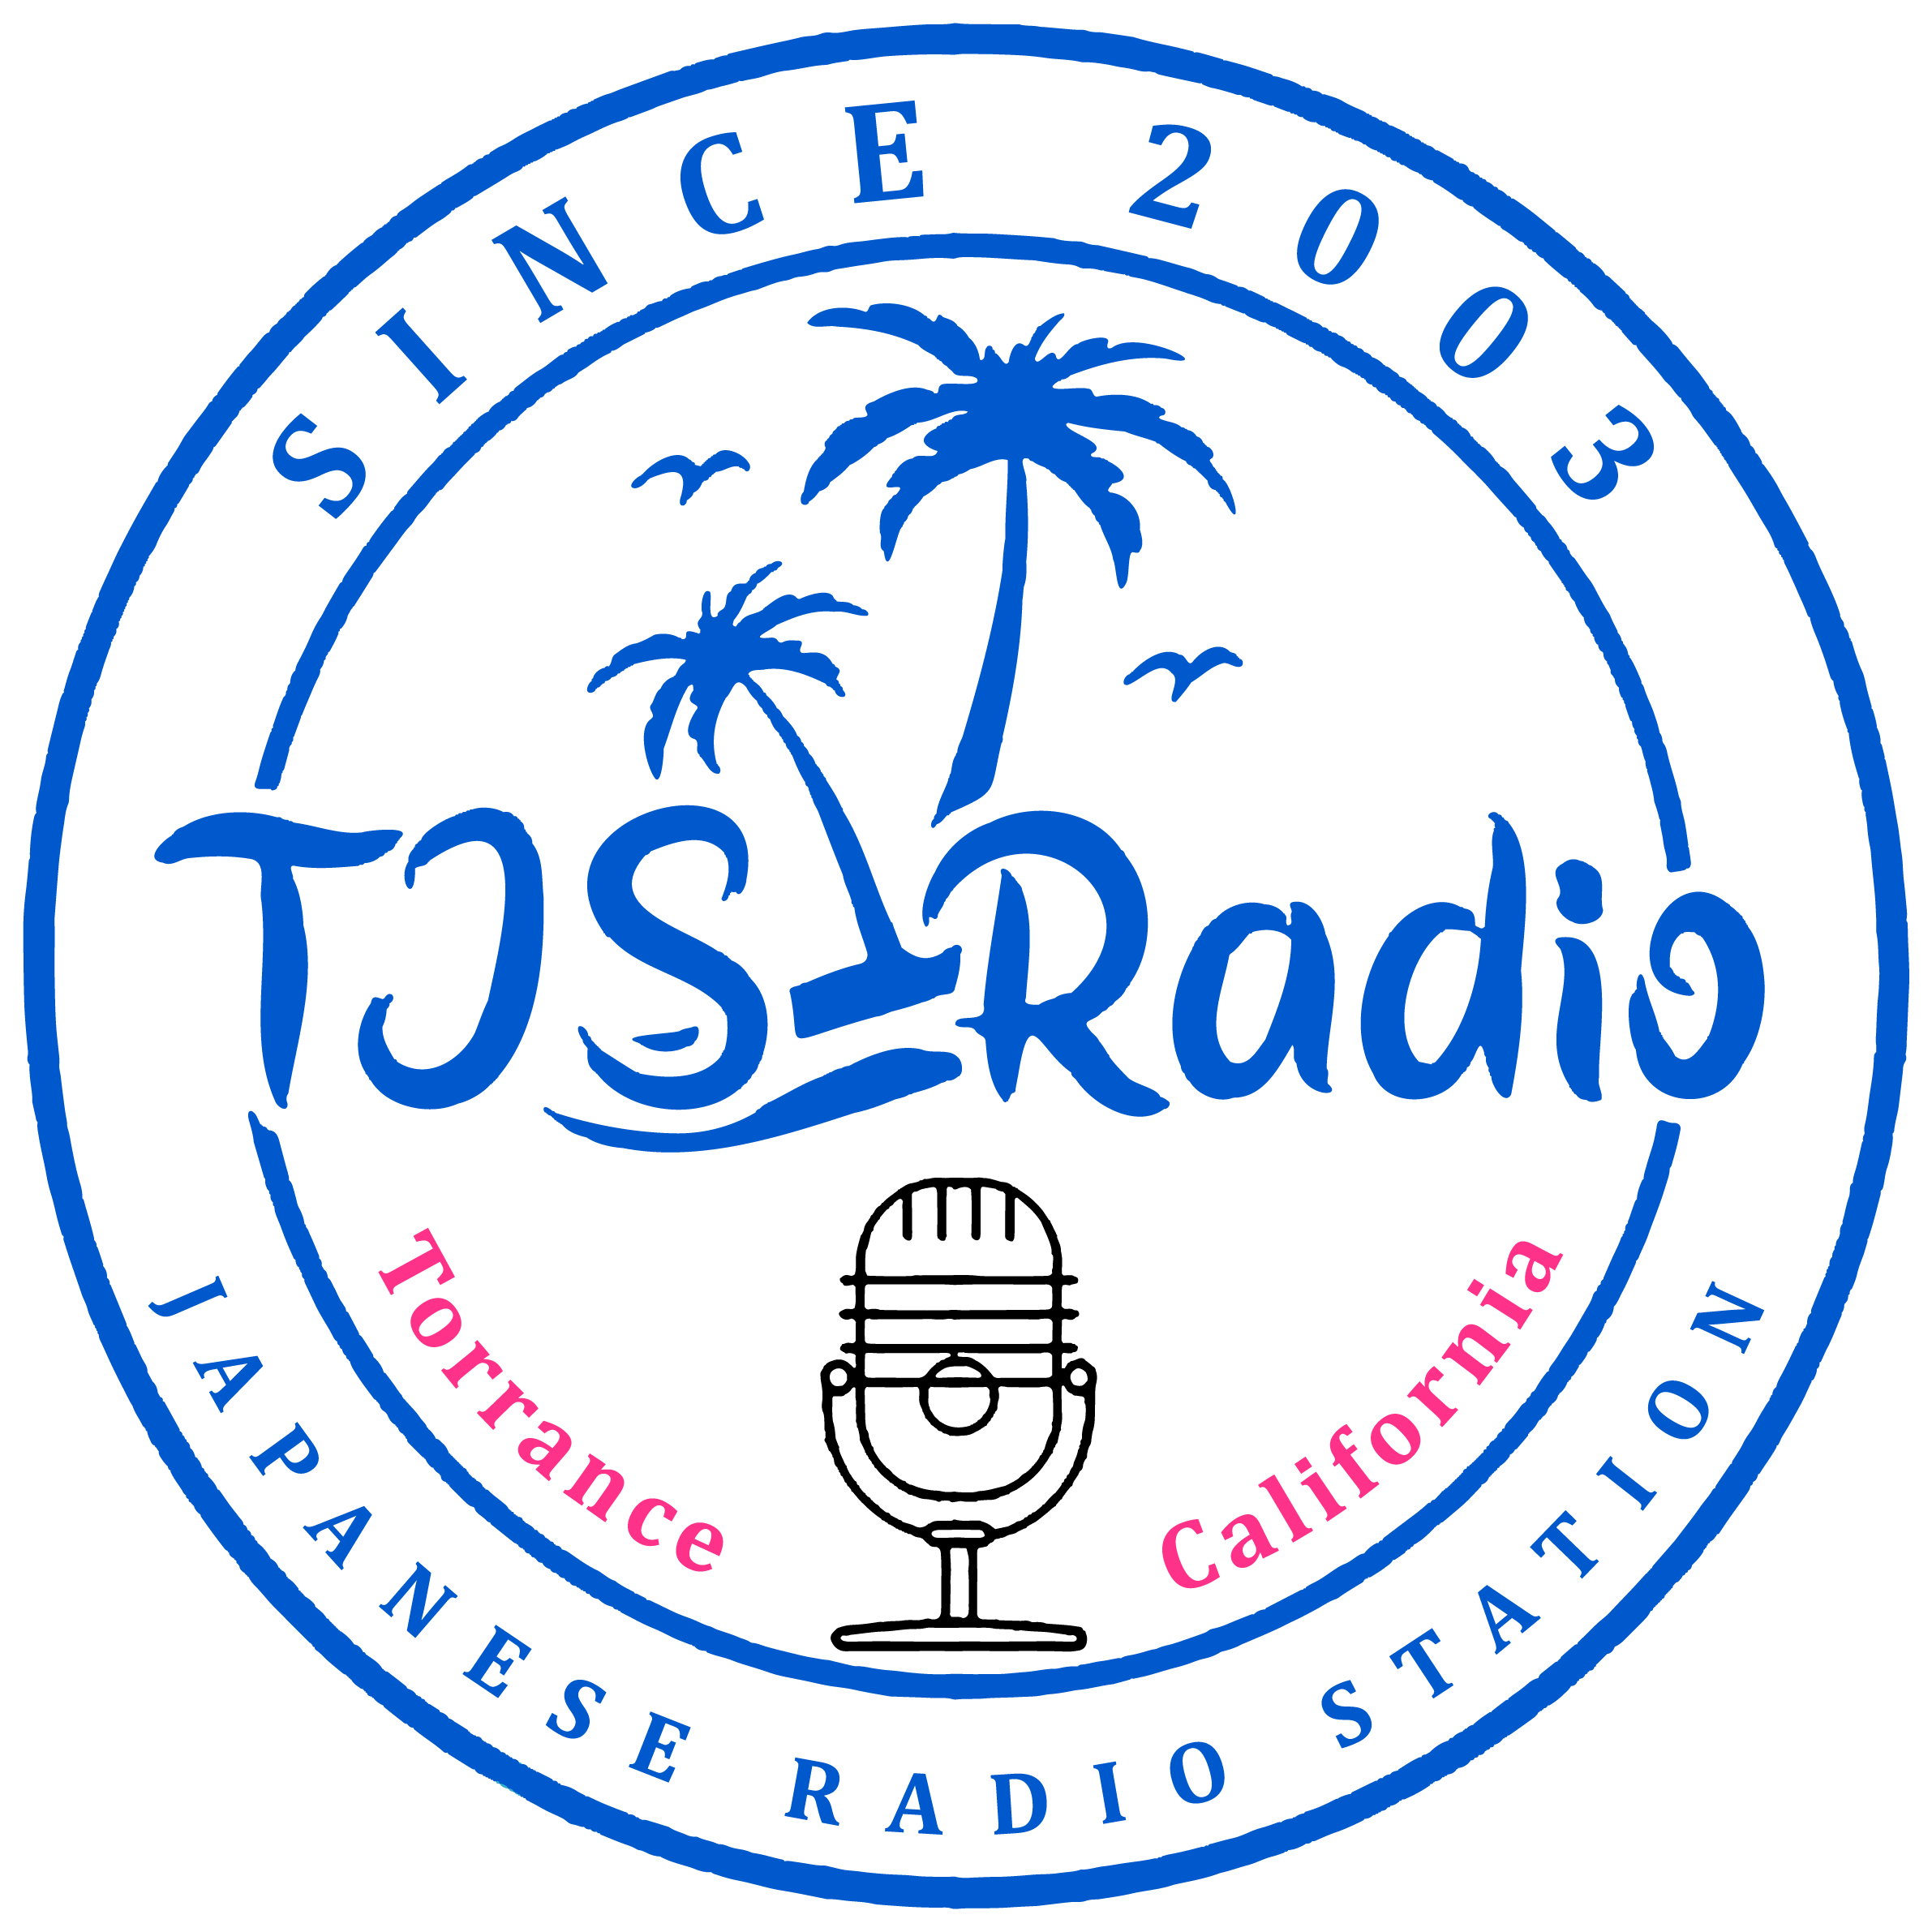 TJS Radio from Torrance